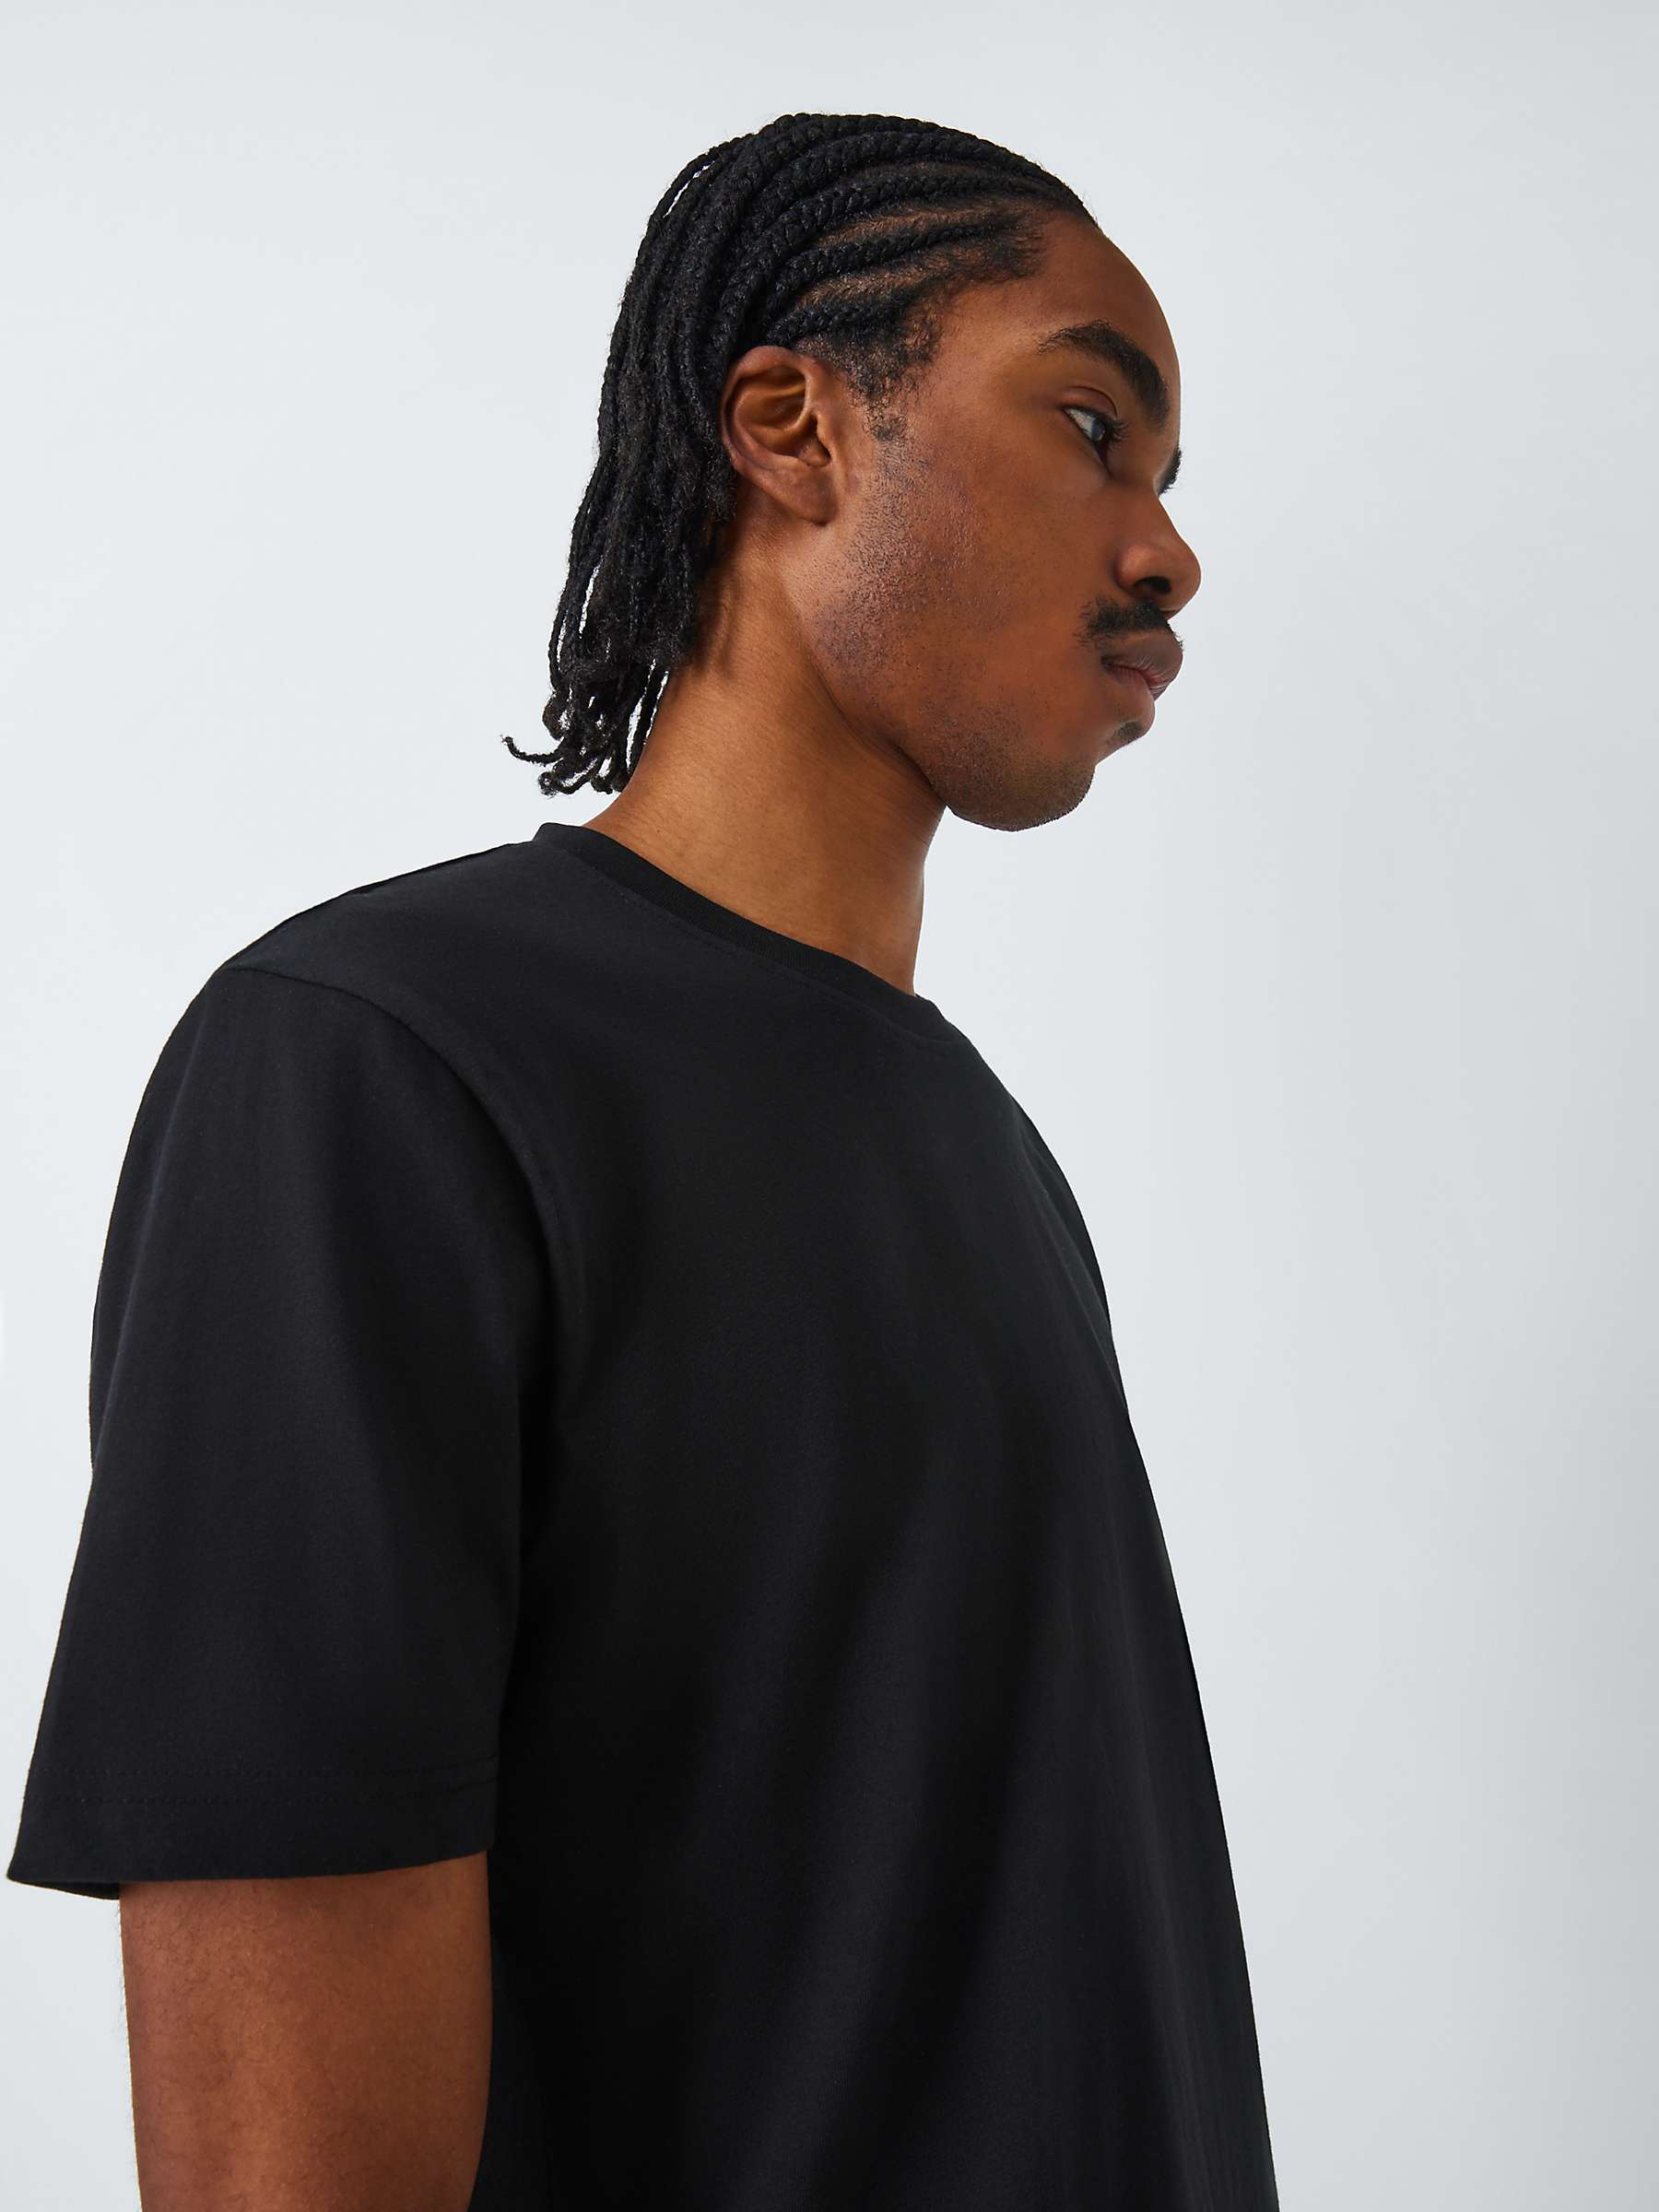 John Lewis ANYDAY Cotton Crew Neck T-Shirt, Black at John Lewis & Partners